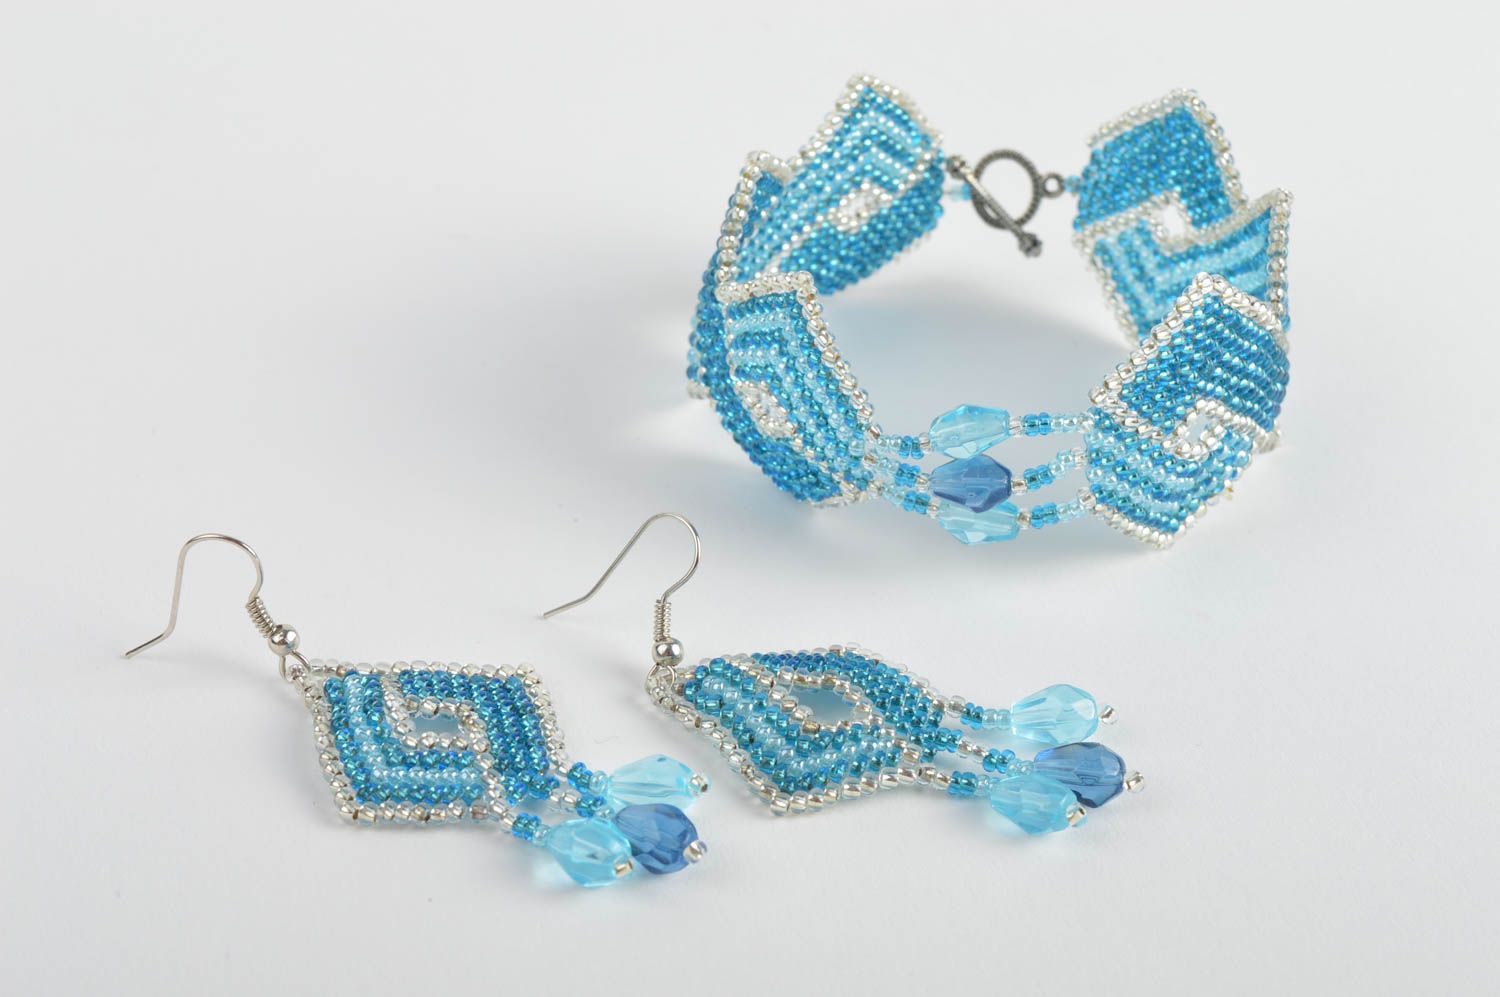 Handmade beaded jewelry set 2 items wrist bracelet and earrings Blue Rhombus photo 5